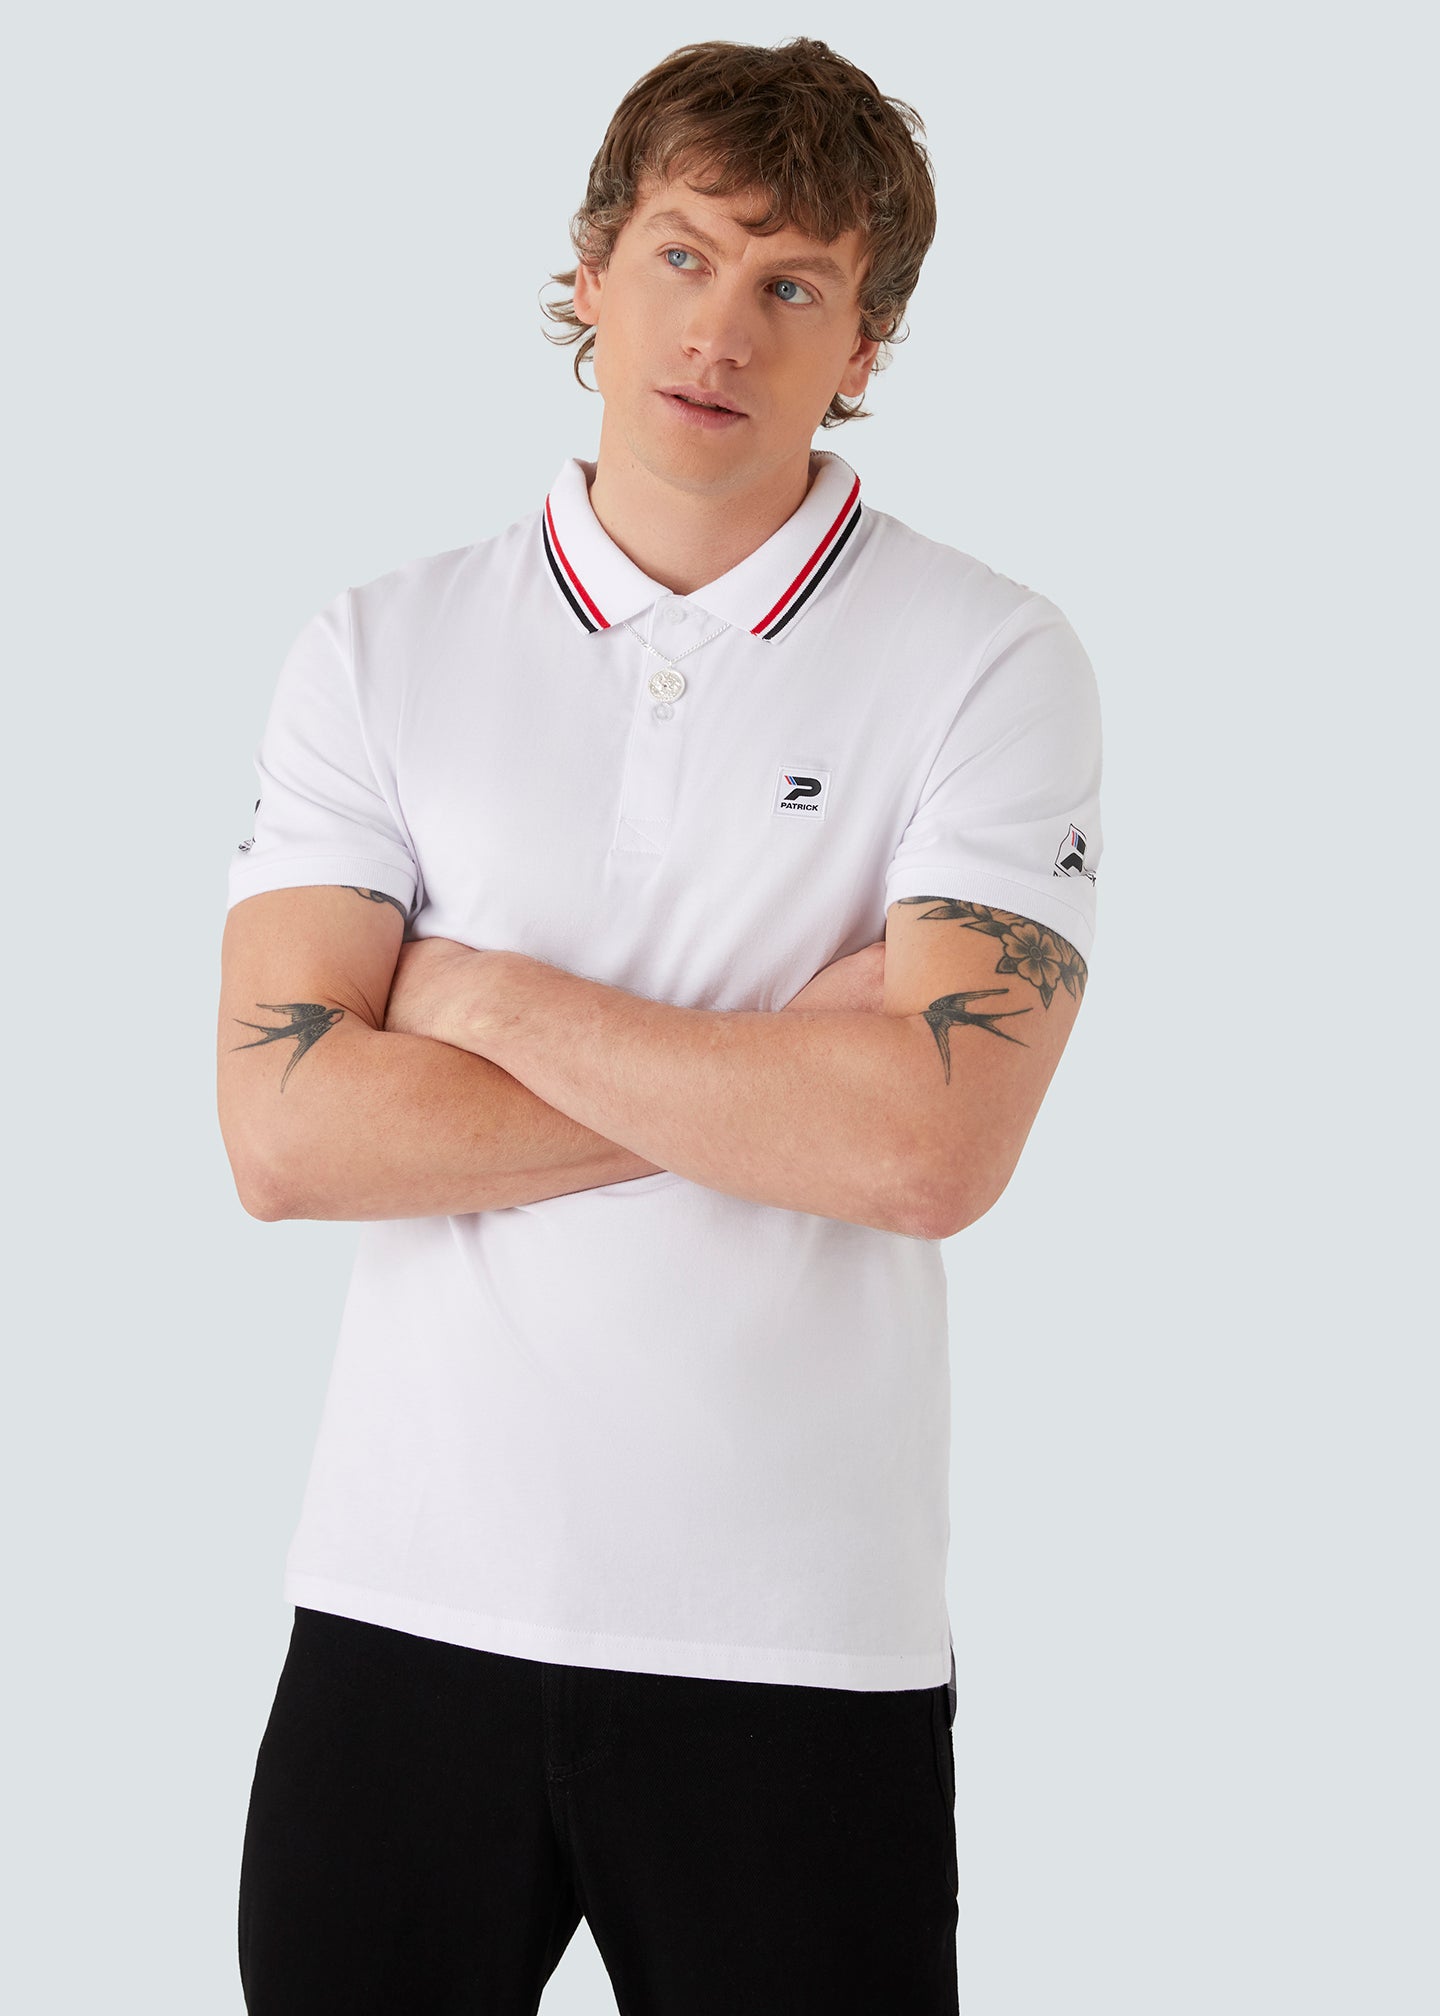 Patrick Grenoble Polo Shirt - White - Front